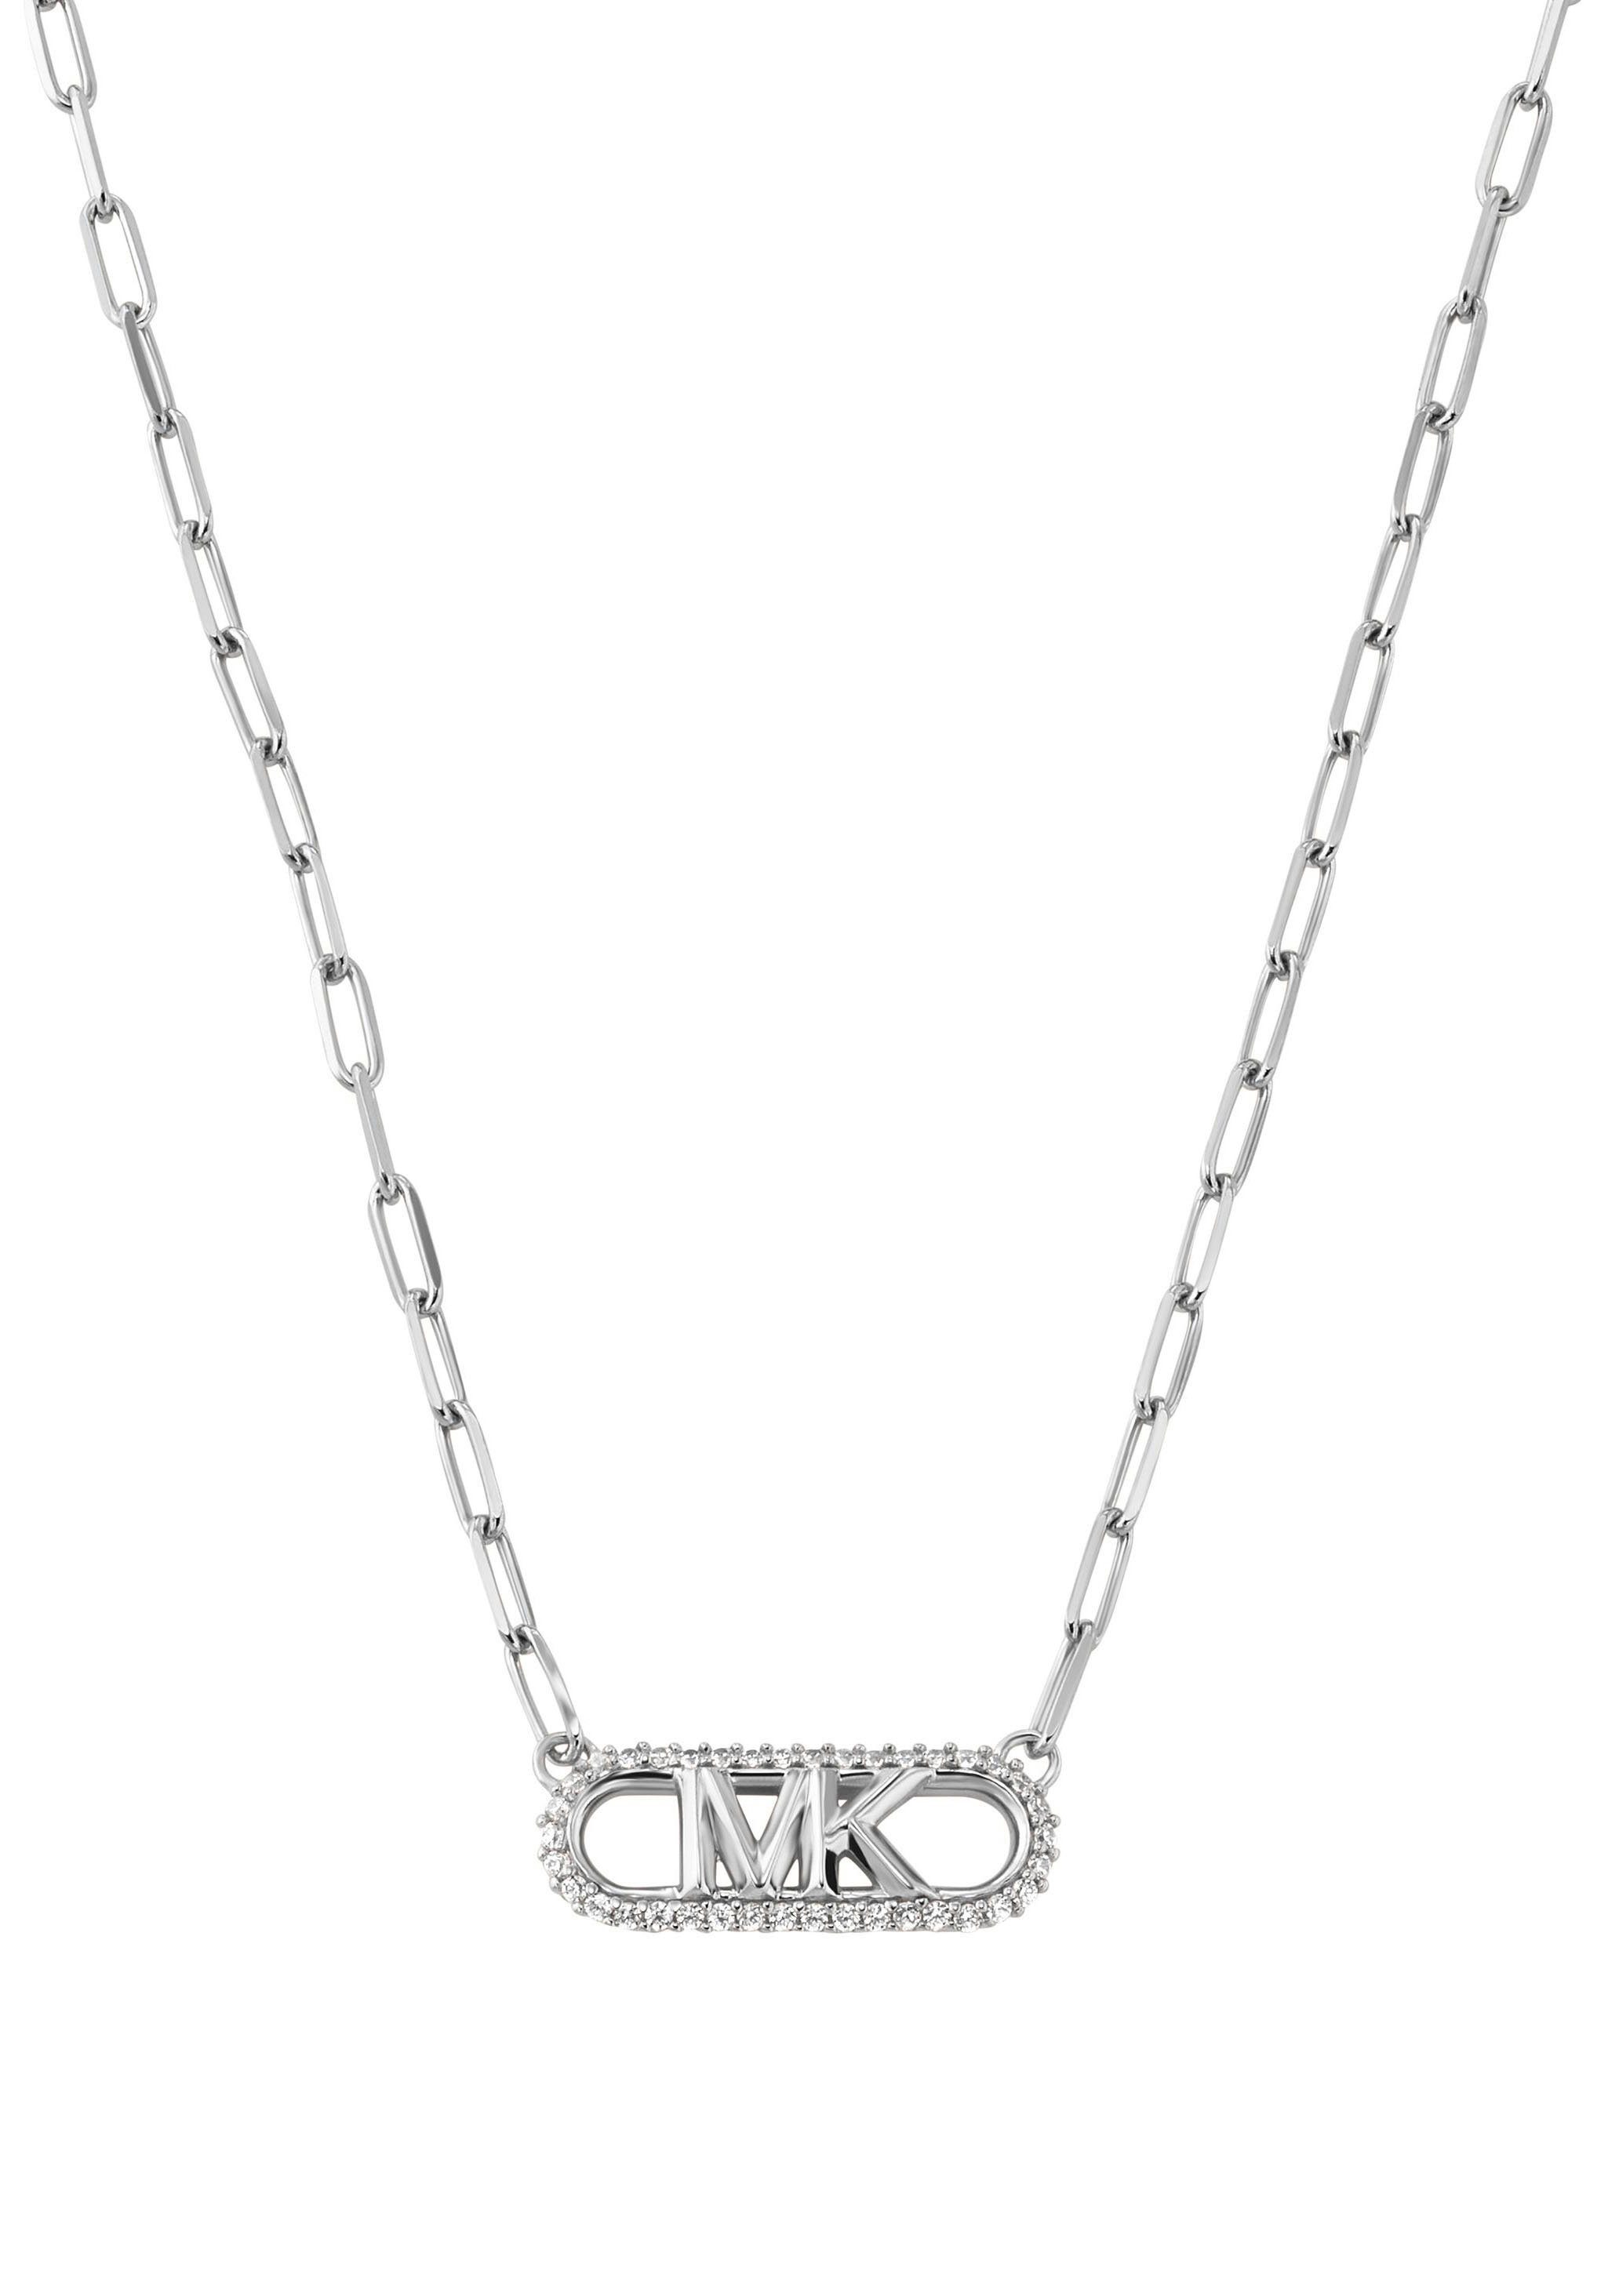 MICHAEL KORS Kette mit Anhänger PREMIUM, EMPIRE, OVAL, MKC1655CZ silberfarben-kristallweiß | Silberketten